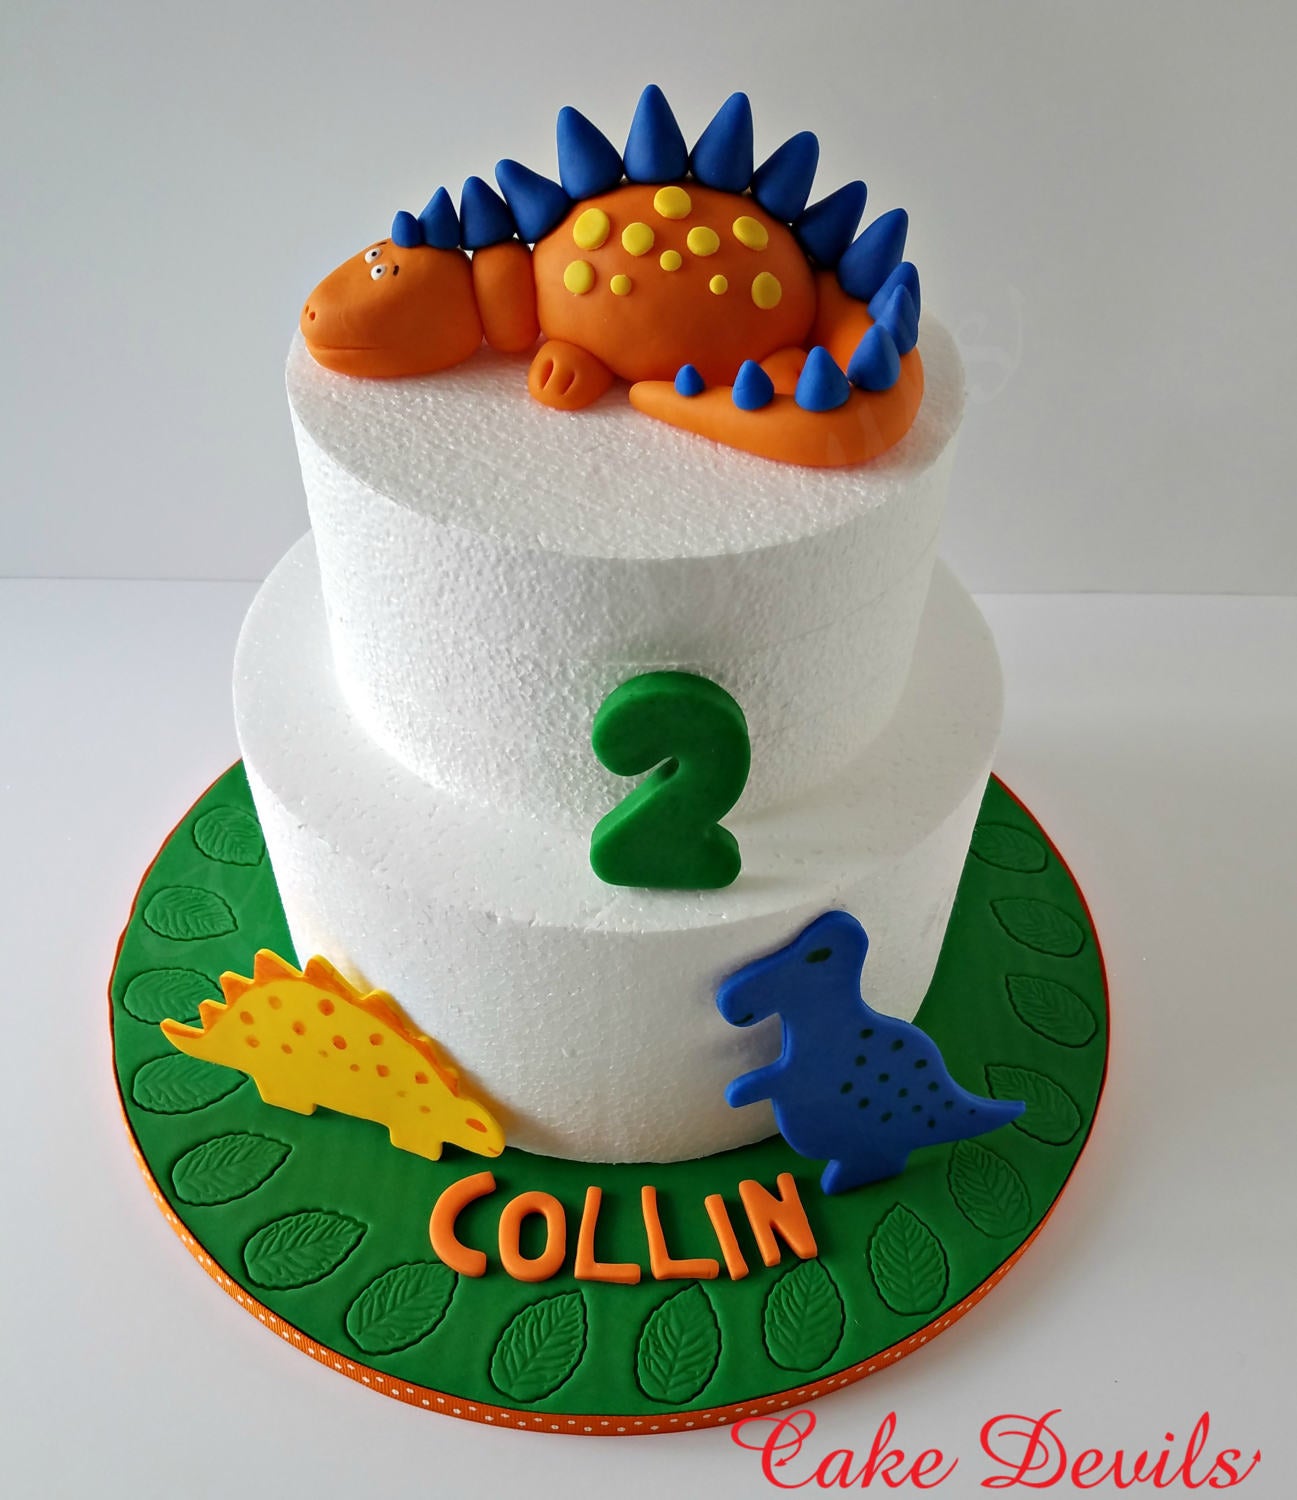 Fondant Dinosaur Cake Topper Standing up with Spikes, handmade edible,  Dinosaur Cake Decorations, Dinosaur theme birthday party, dino